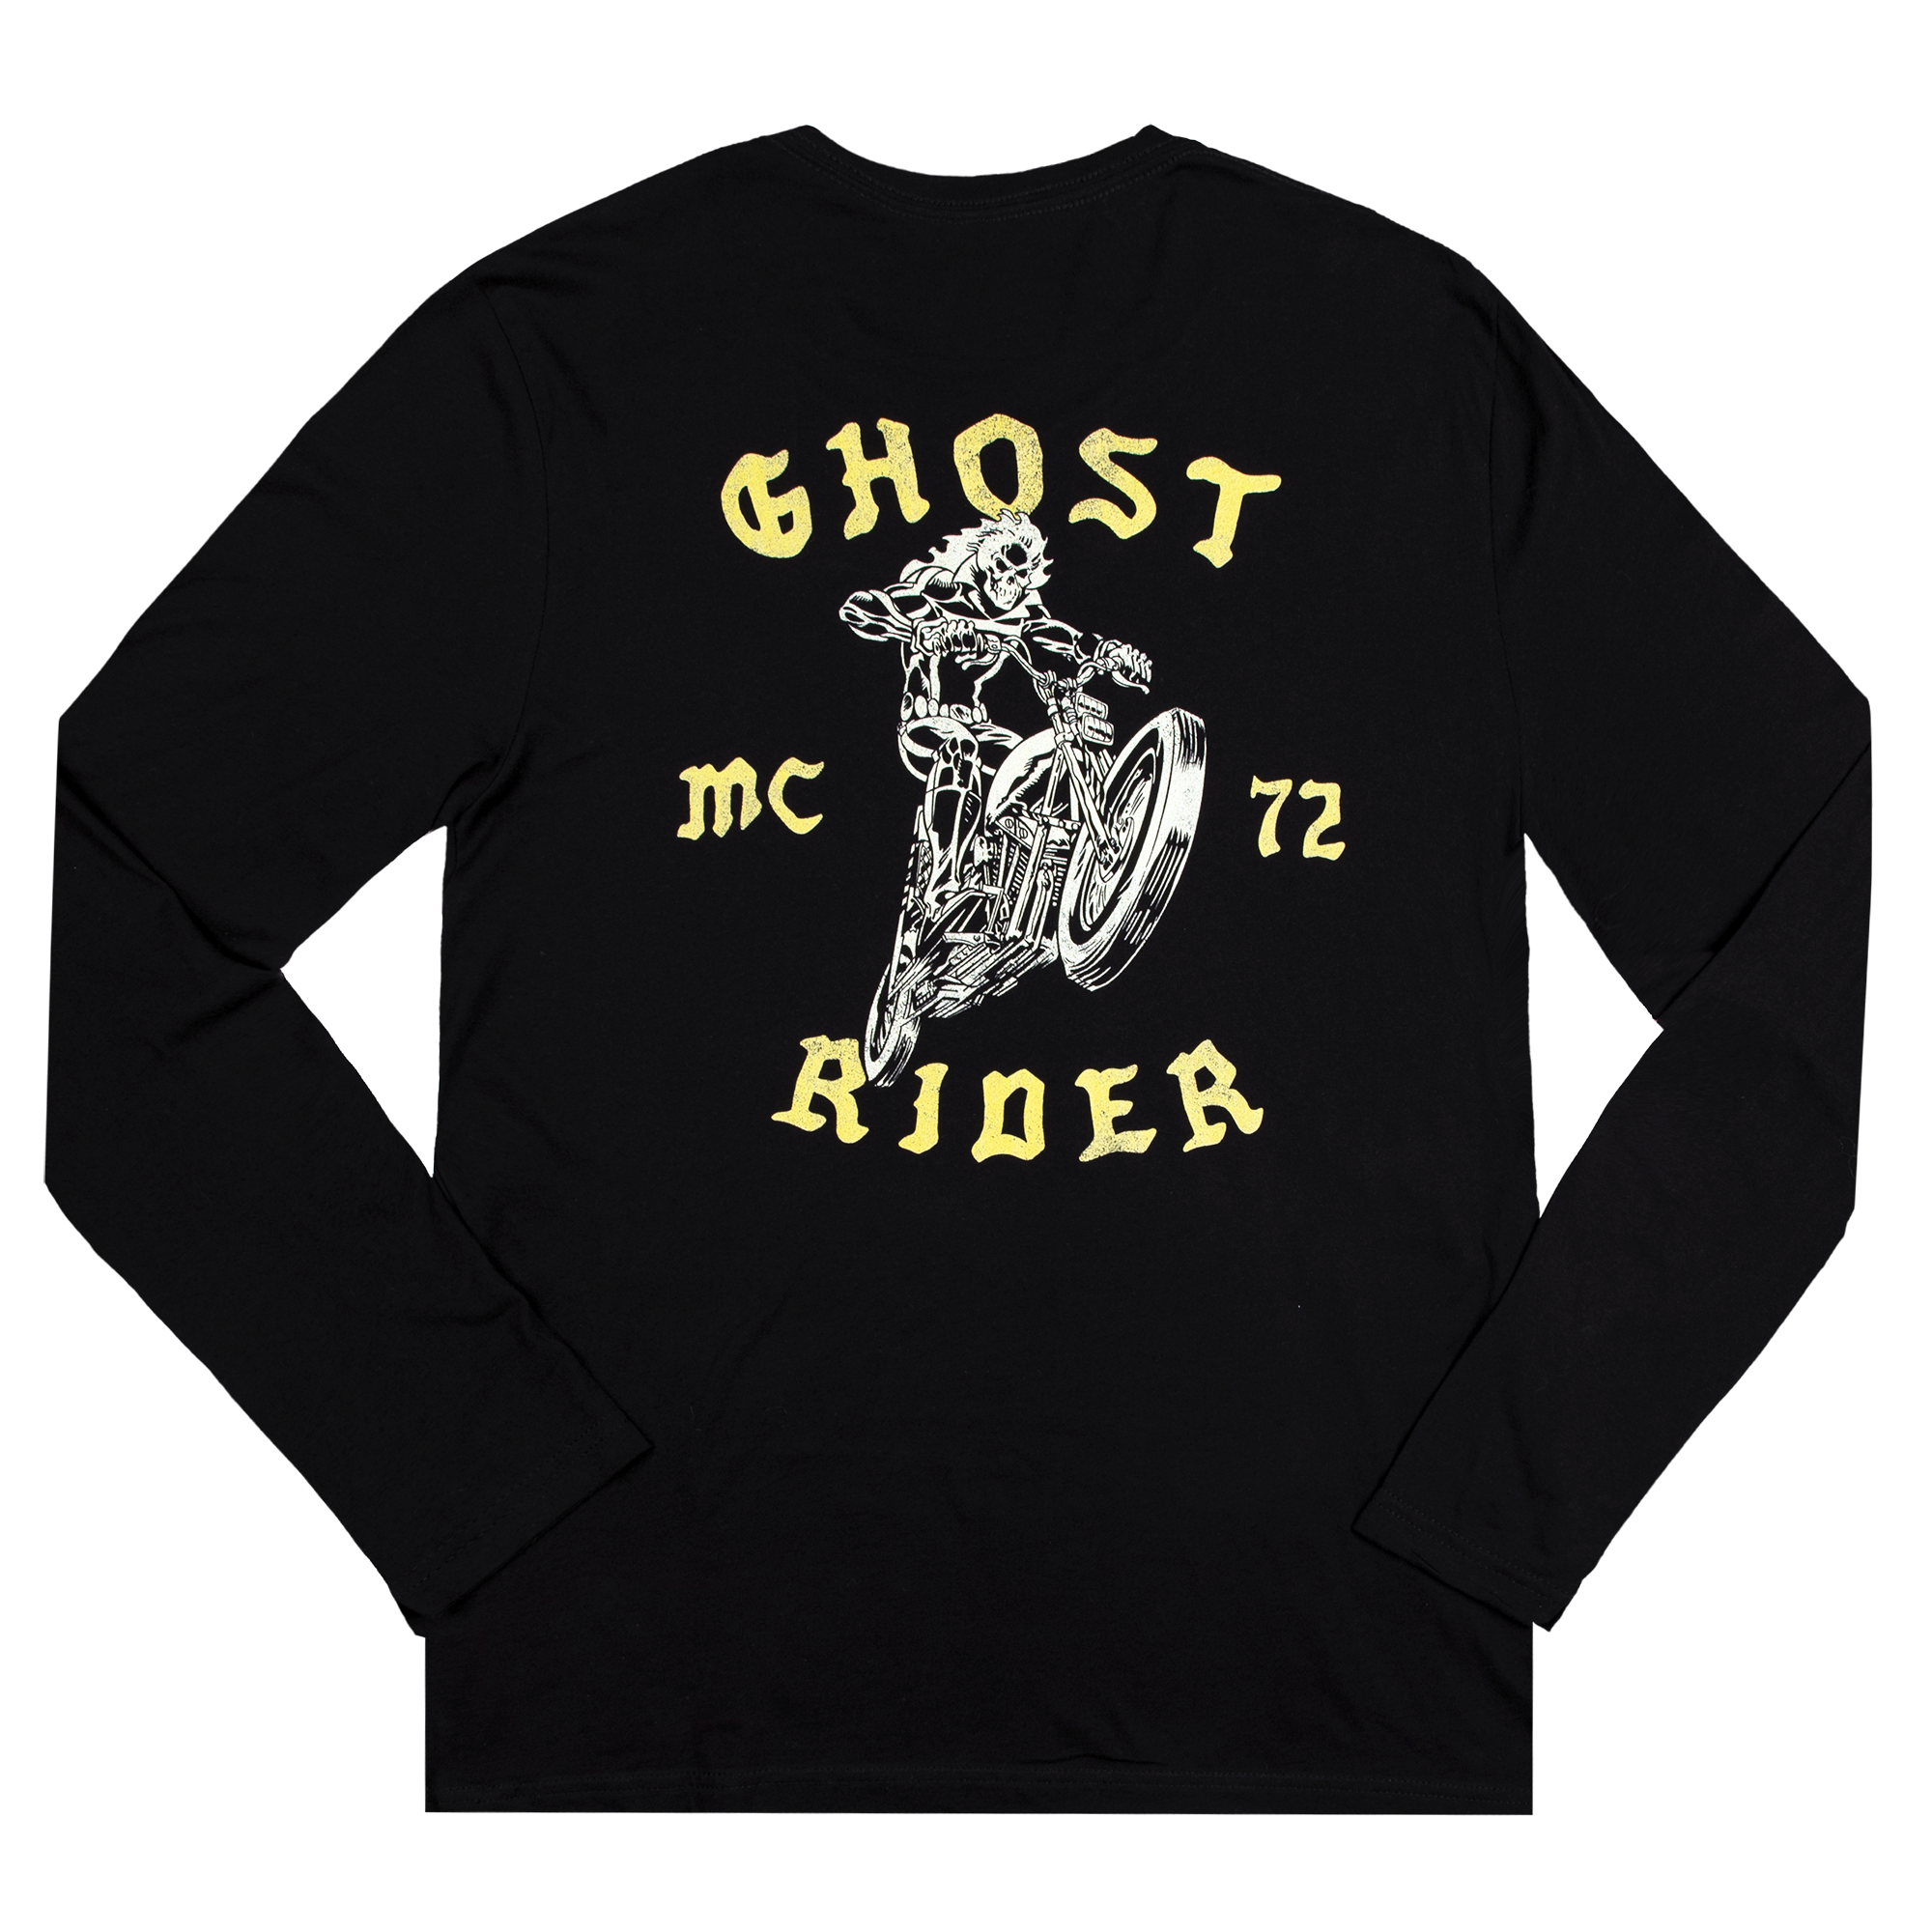 Ghost Rider Rocker Black Long Sleeve